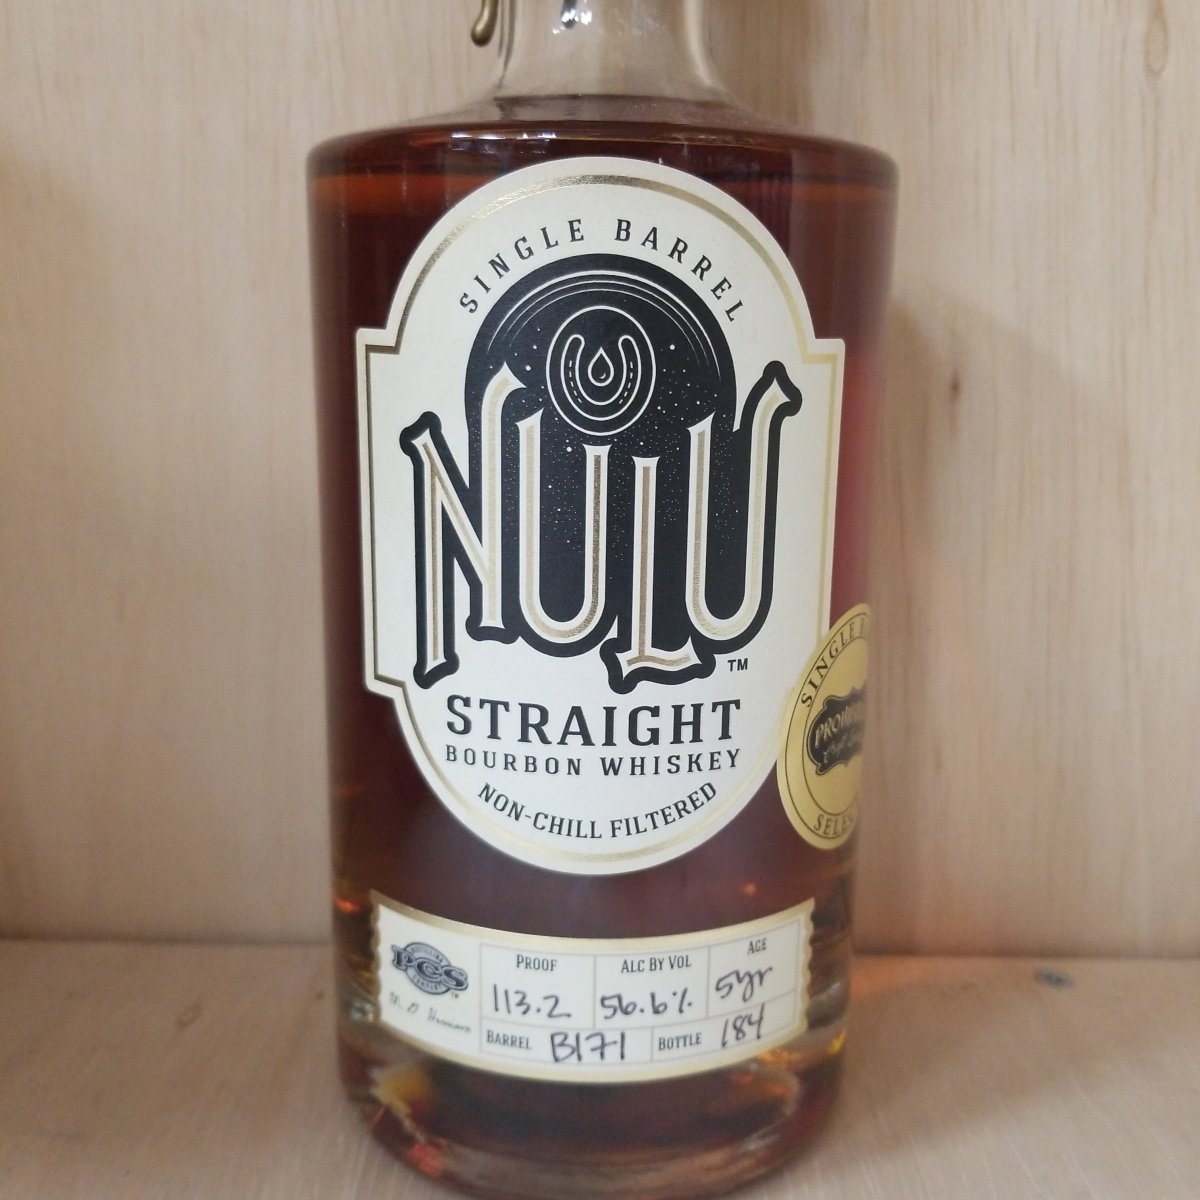 Nulo Single Barrel Strength Straight Bourbon 750ml (Barrel B171, proof 113.2) - Sip & Say